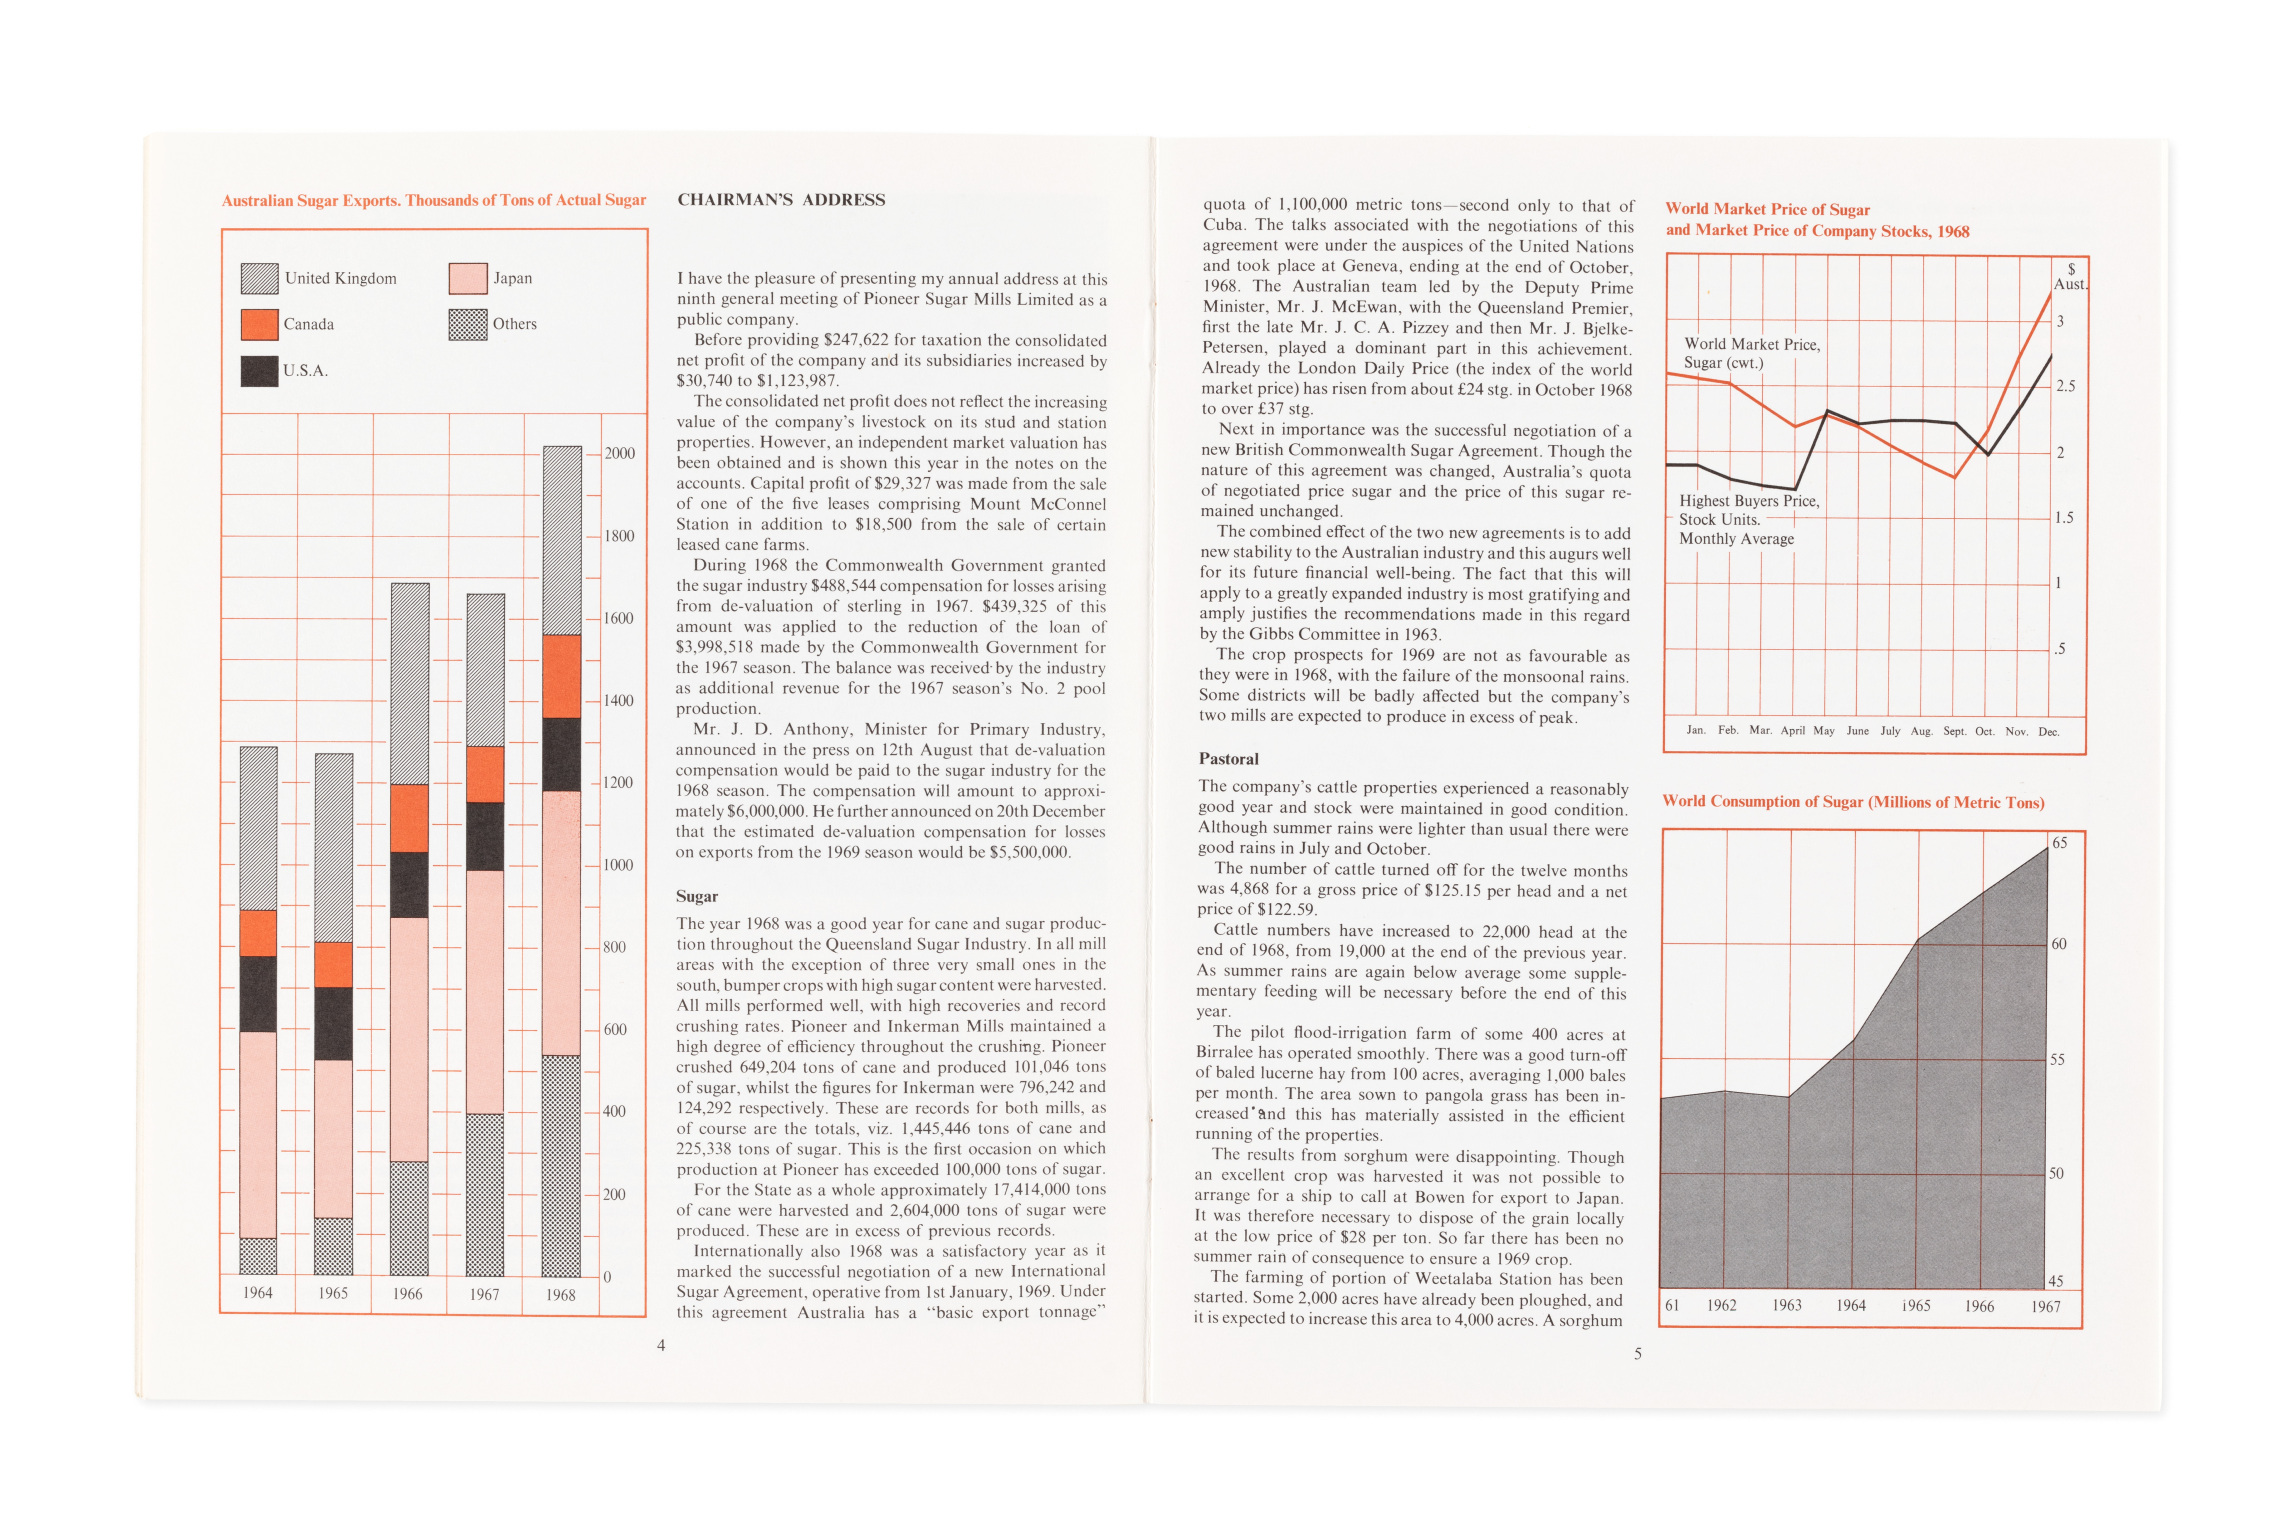 Pioneer Sugar Mills annual report designed by Alistair Morrison